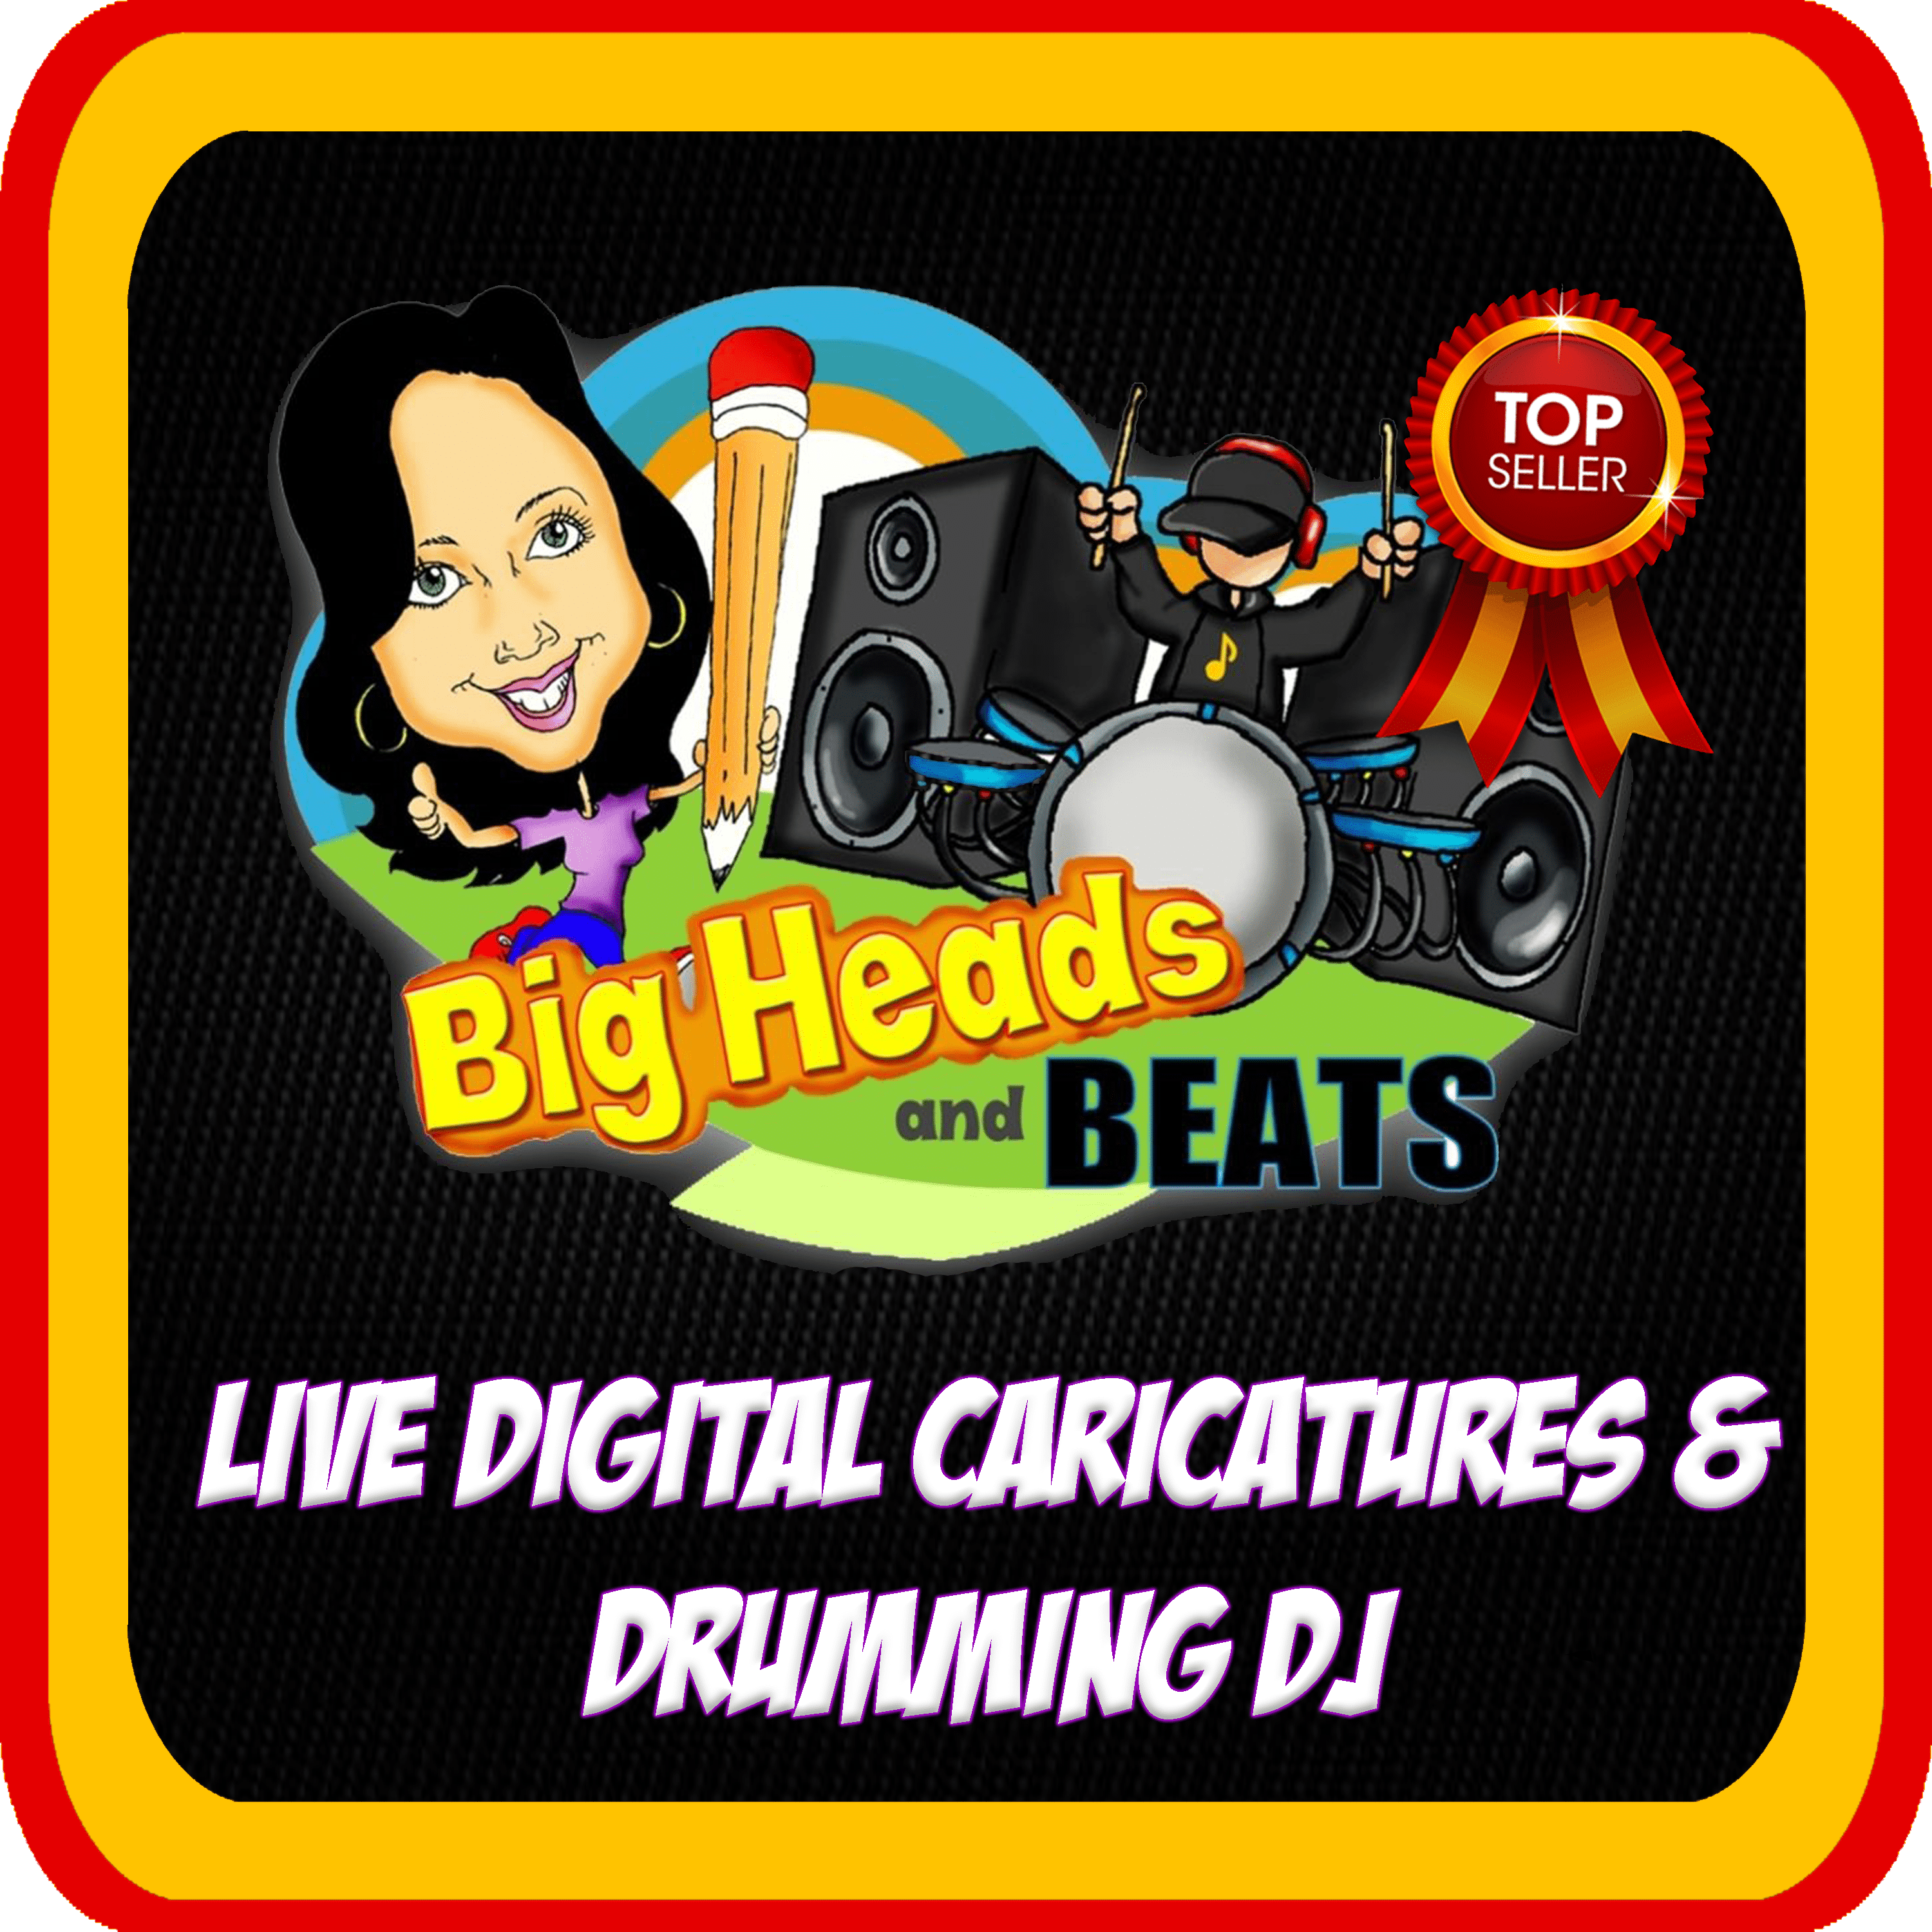 Virtual Caricatures, Zoom Caricatures, Virtual Entertainment, Virtual Caricature Artist, Virtual Team Building, Virtual Party Ideas, Zoom Caricatures, Virtual Entertainment Ideas, Virtual DJ, Drumming DJ, Big Heads & Beats, Virtual Party, Virtual Team Building